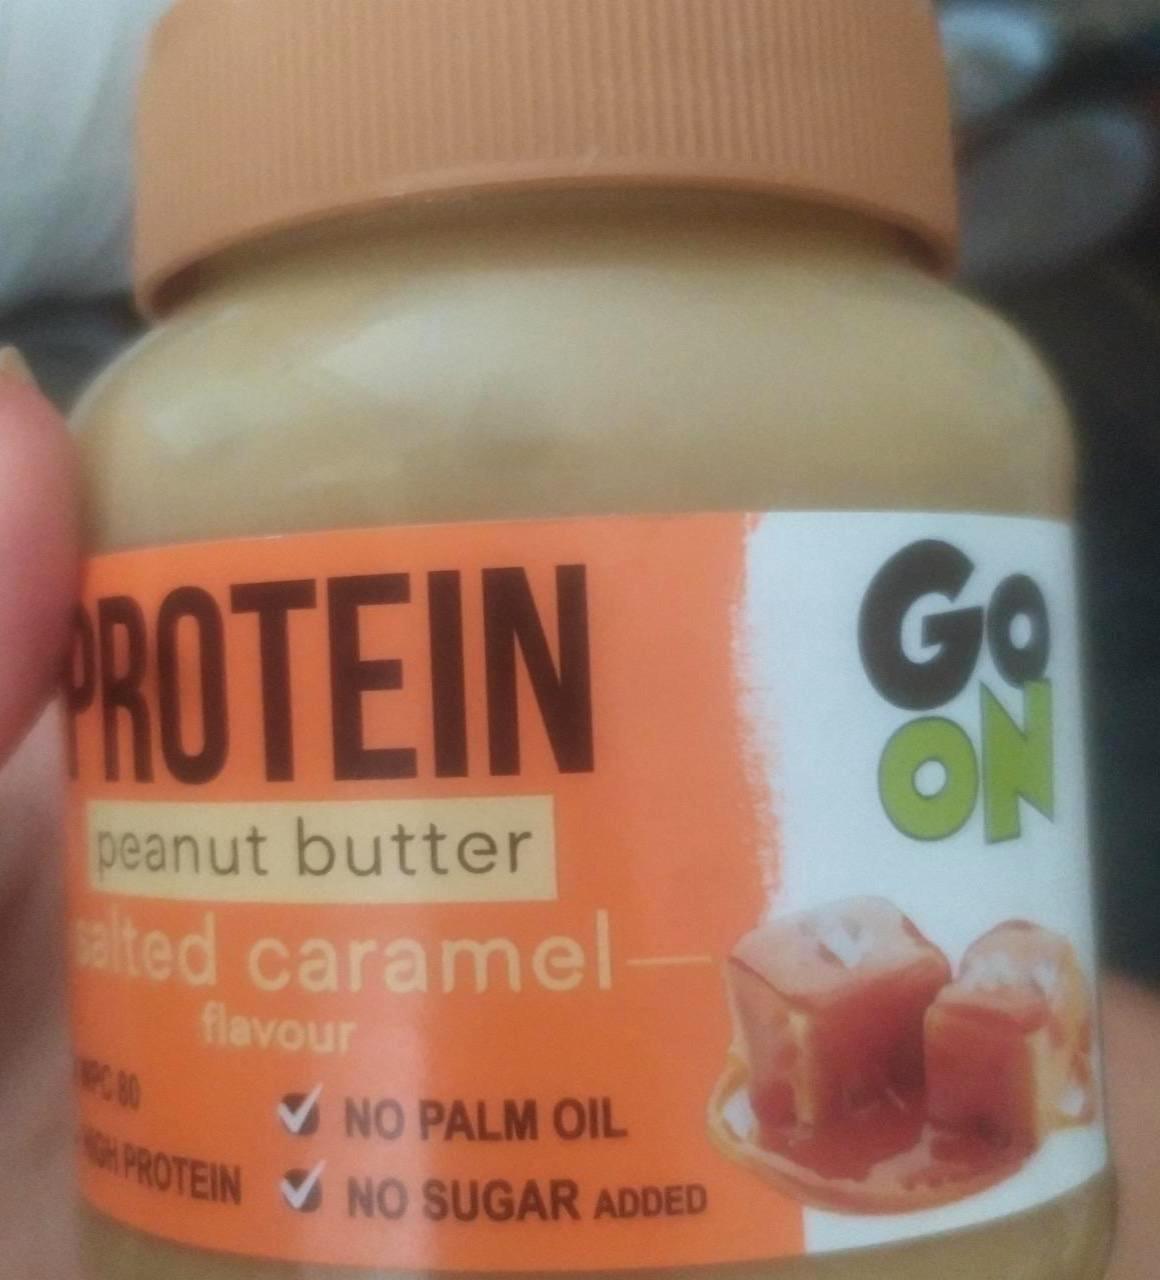 Képek - Protein peanut butter Salted caramel Go On Nutrition